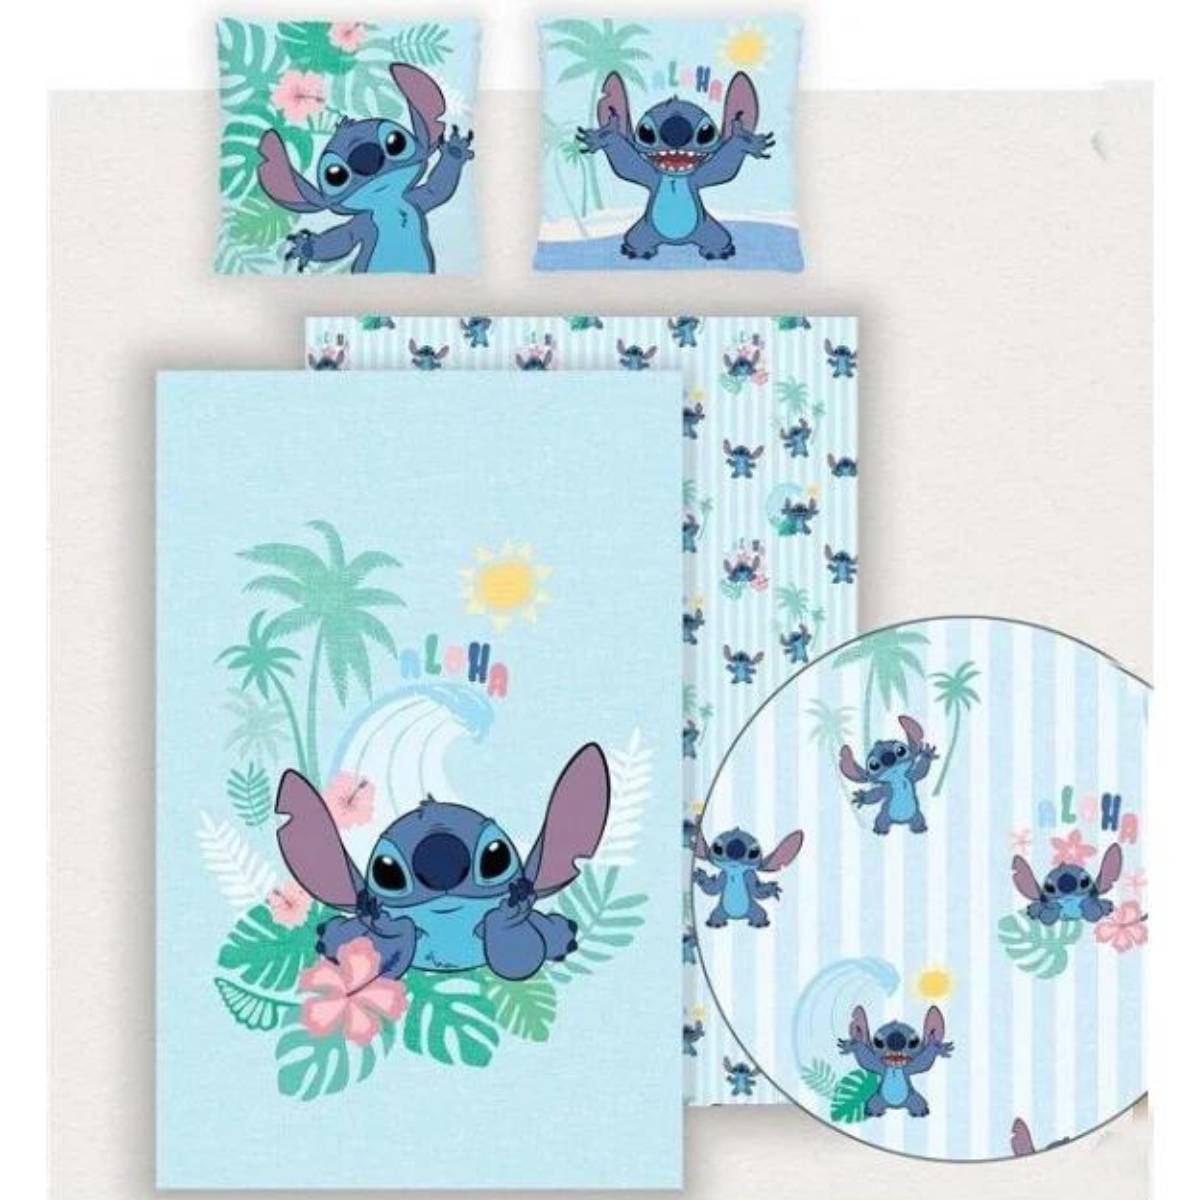 Stitch Aloha Duvet Cover Set, 140 x 200 cm, Multicolored